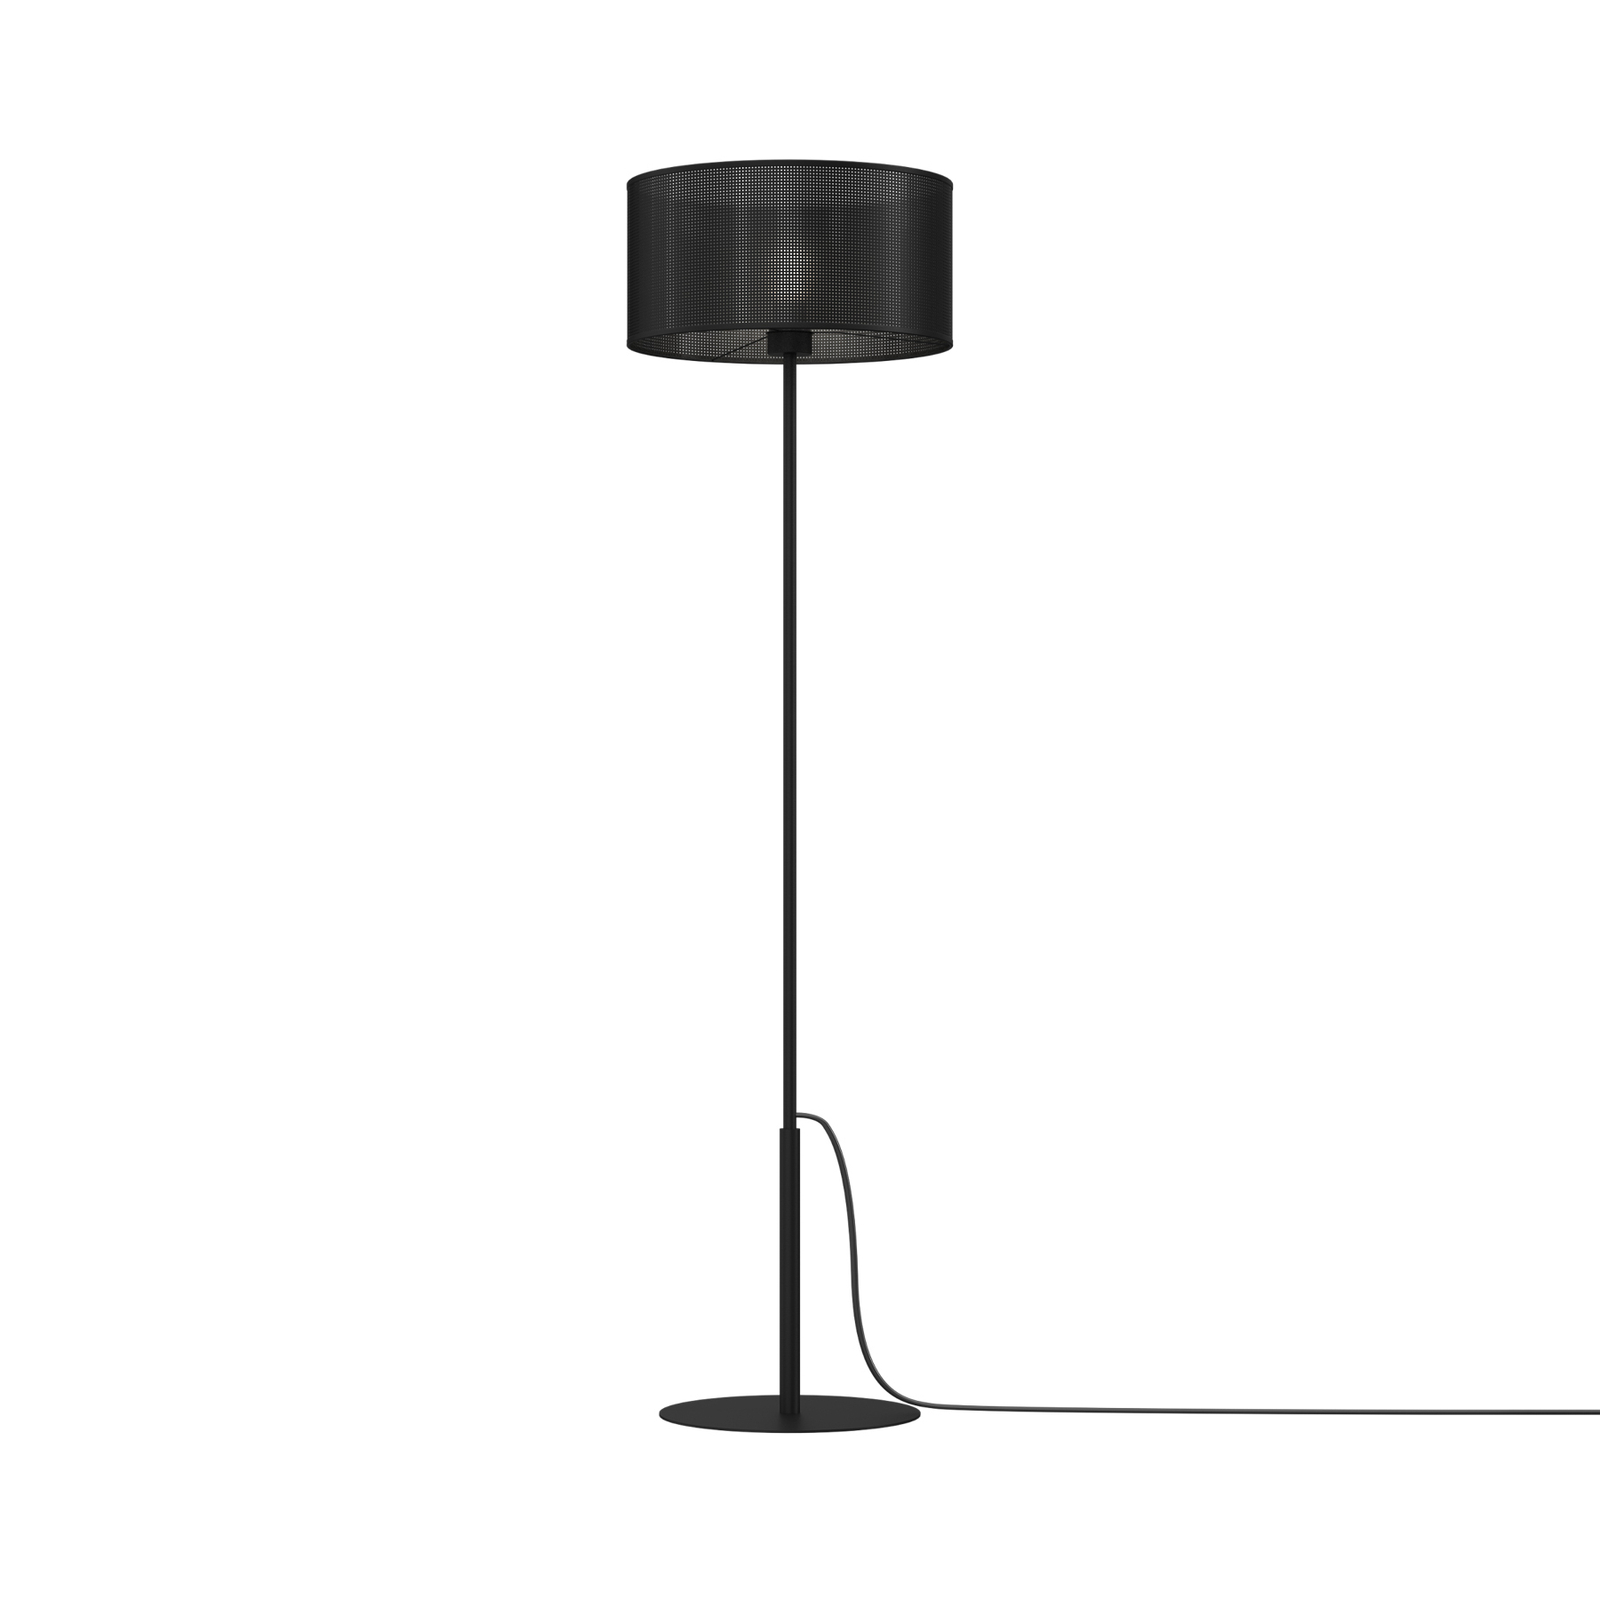 Jovin floor lamp, height 150 cm, black